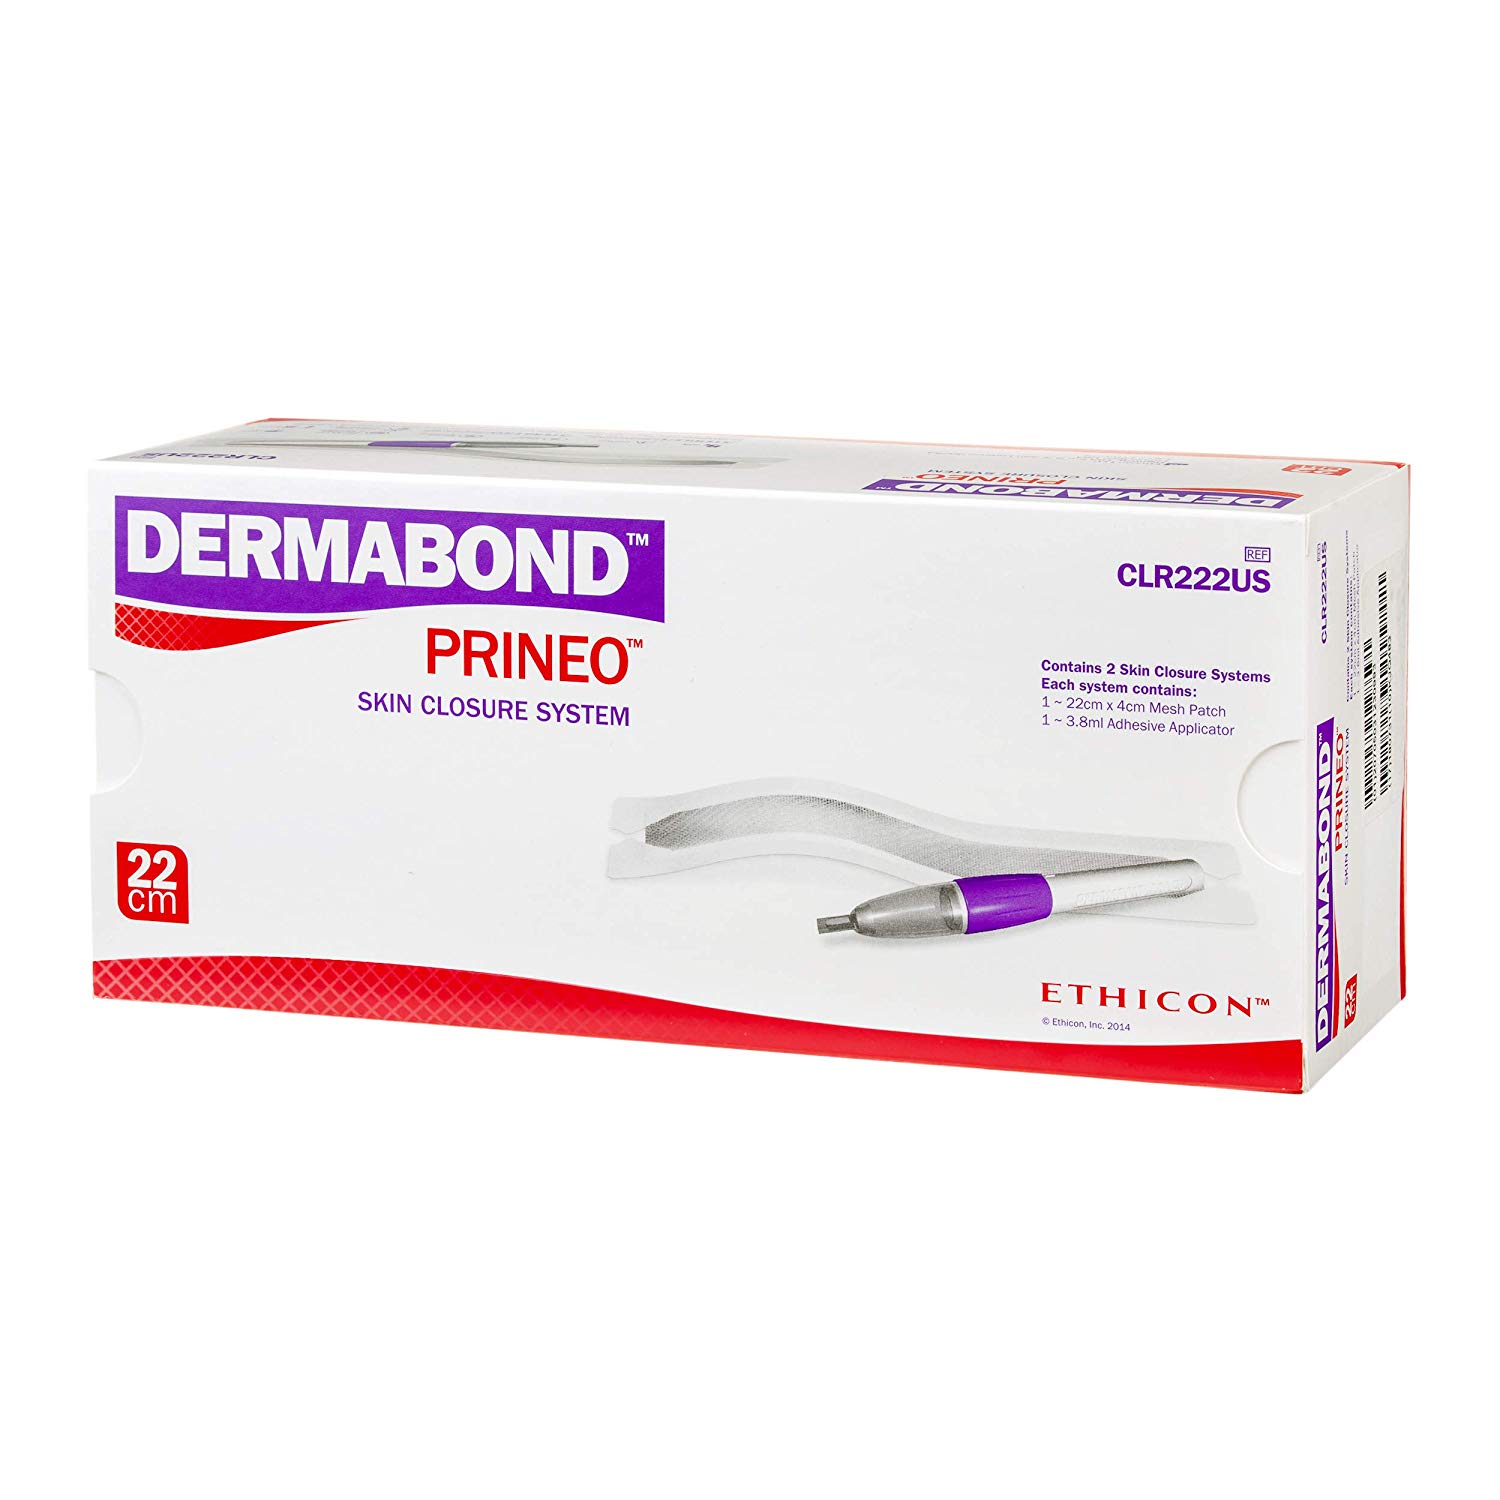 DERMABOND PRINEO Skin Closure System, ETHICON™